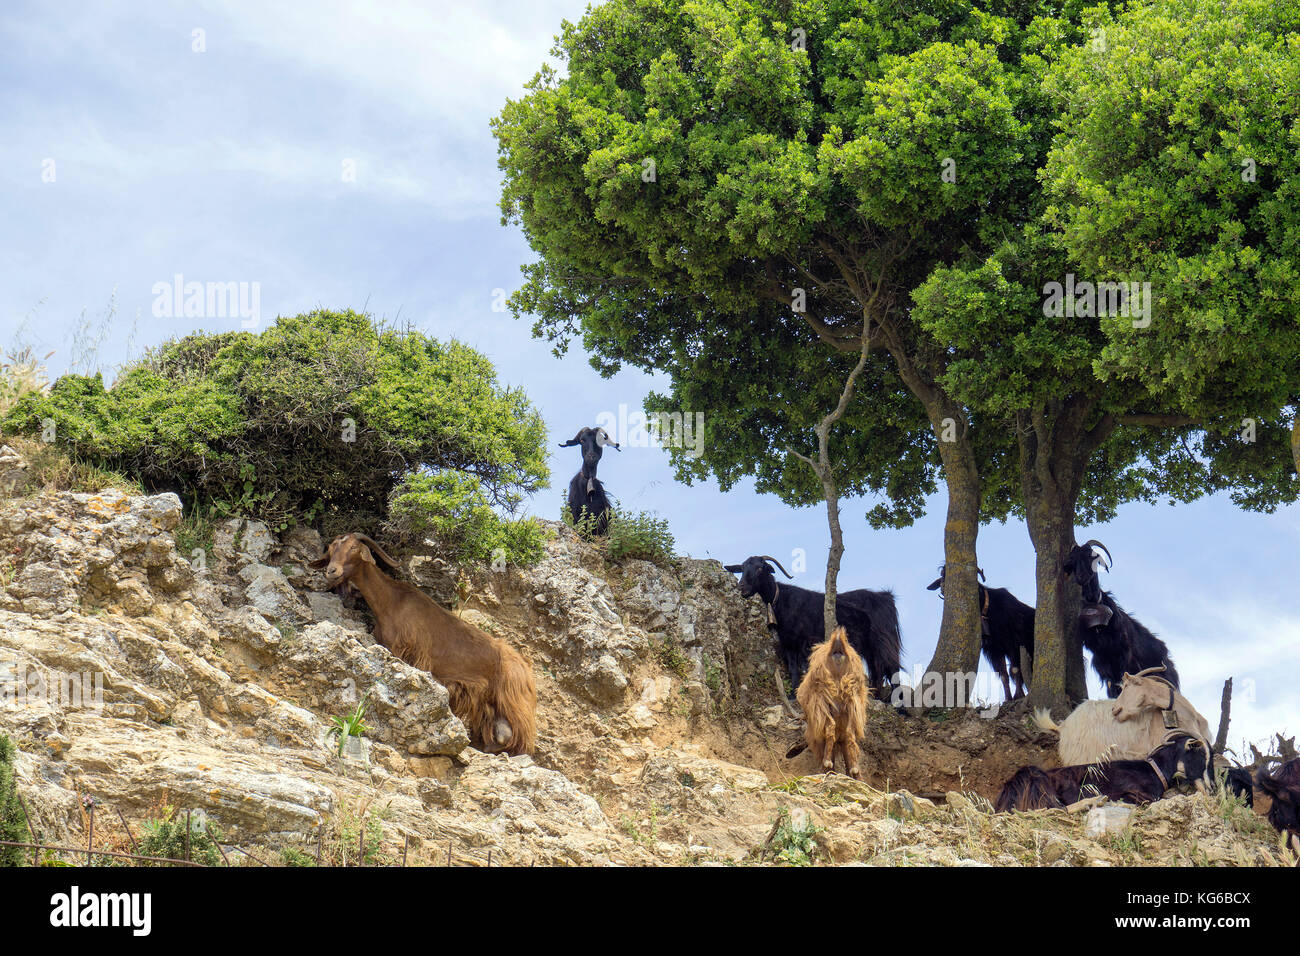 Goats at the shadow of treee, Naxos island, Cyclades, Aegean, Greece Stock Photo